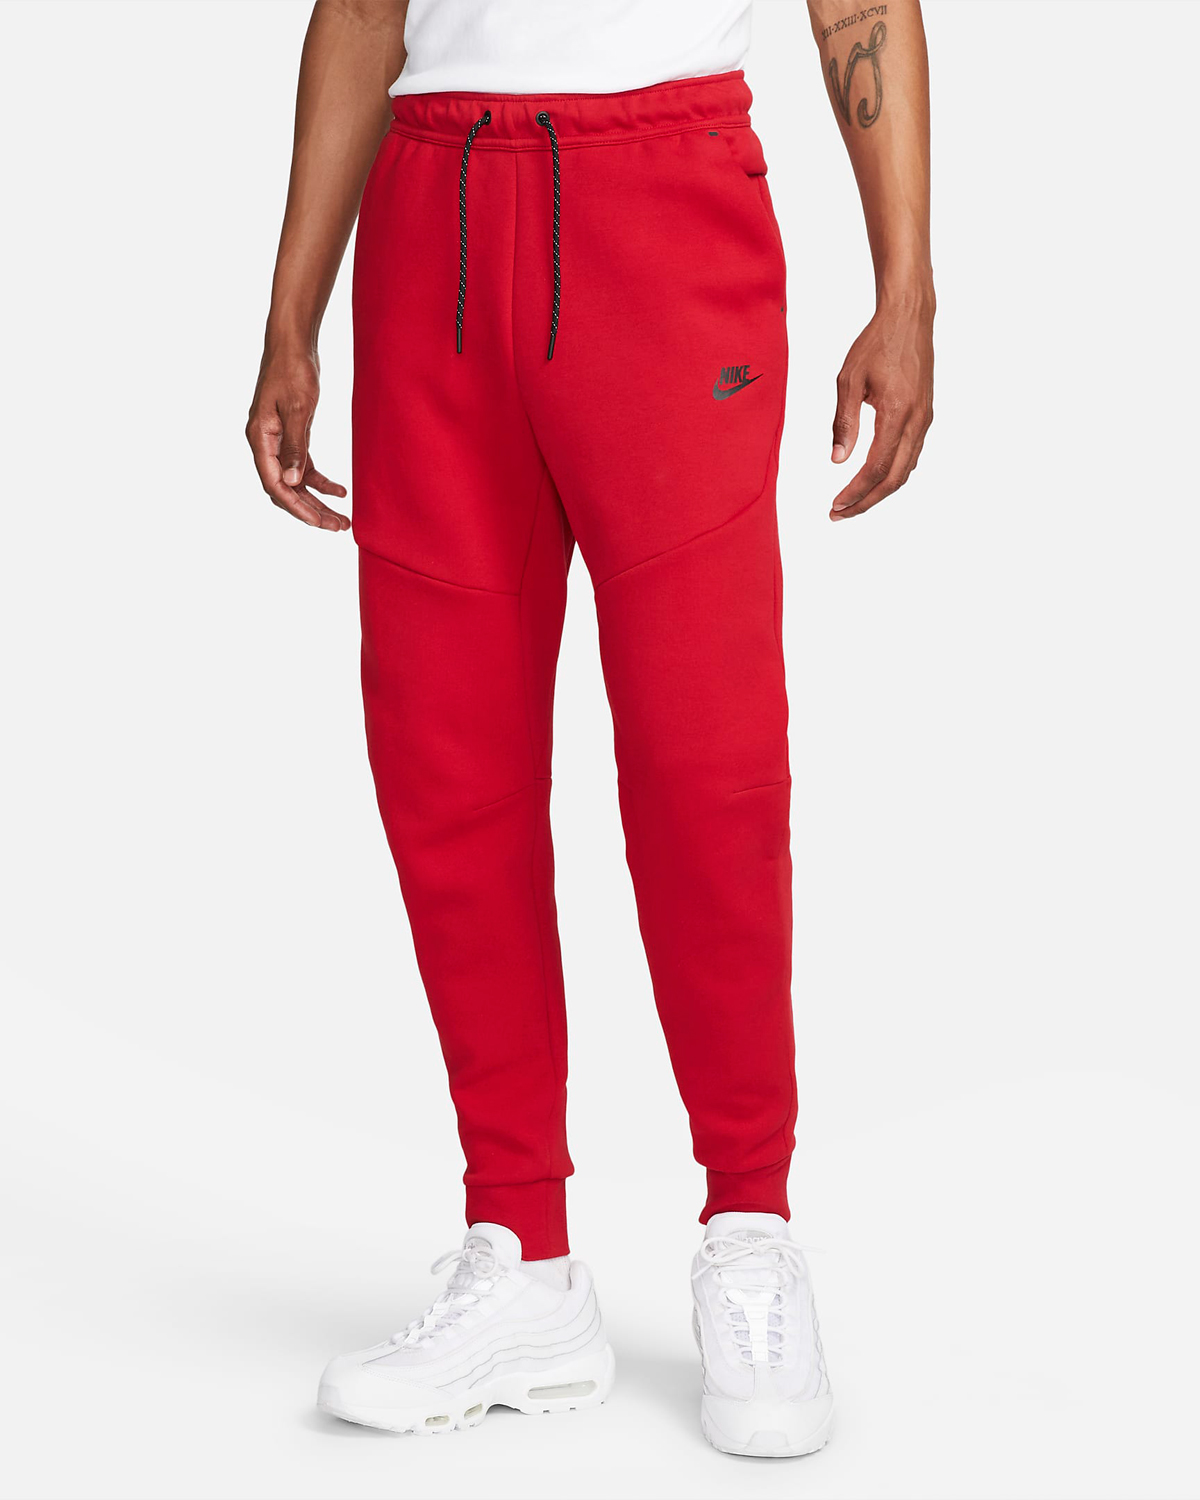 nike-tech-fleece-joggers-pants-red-black-1